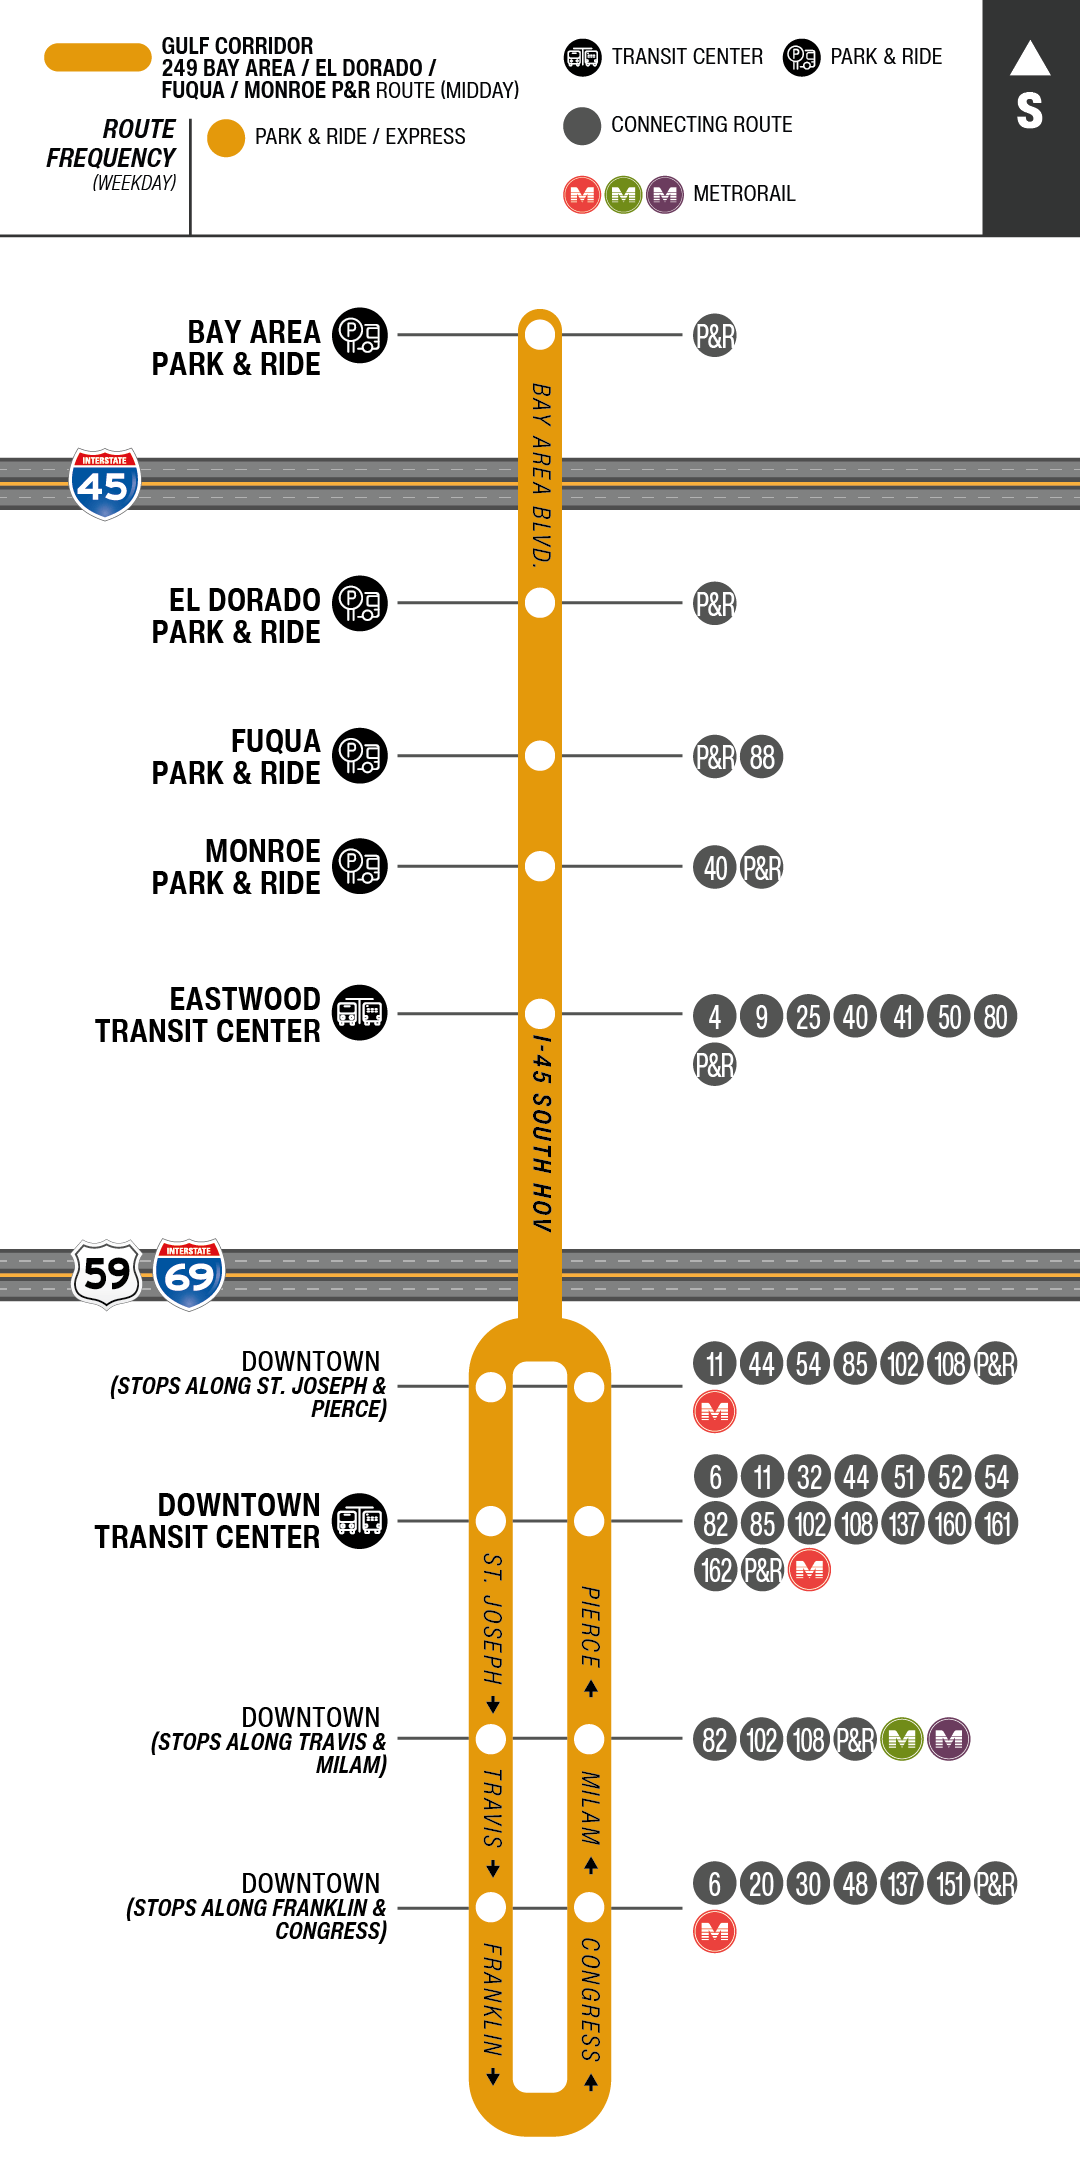 Route map for 249 Bay Area / El Dorado / Fuqua / Monroe Park & Ride bus